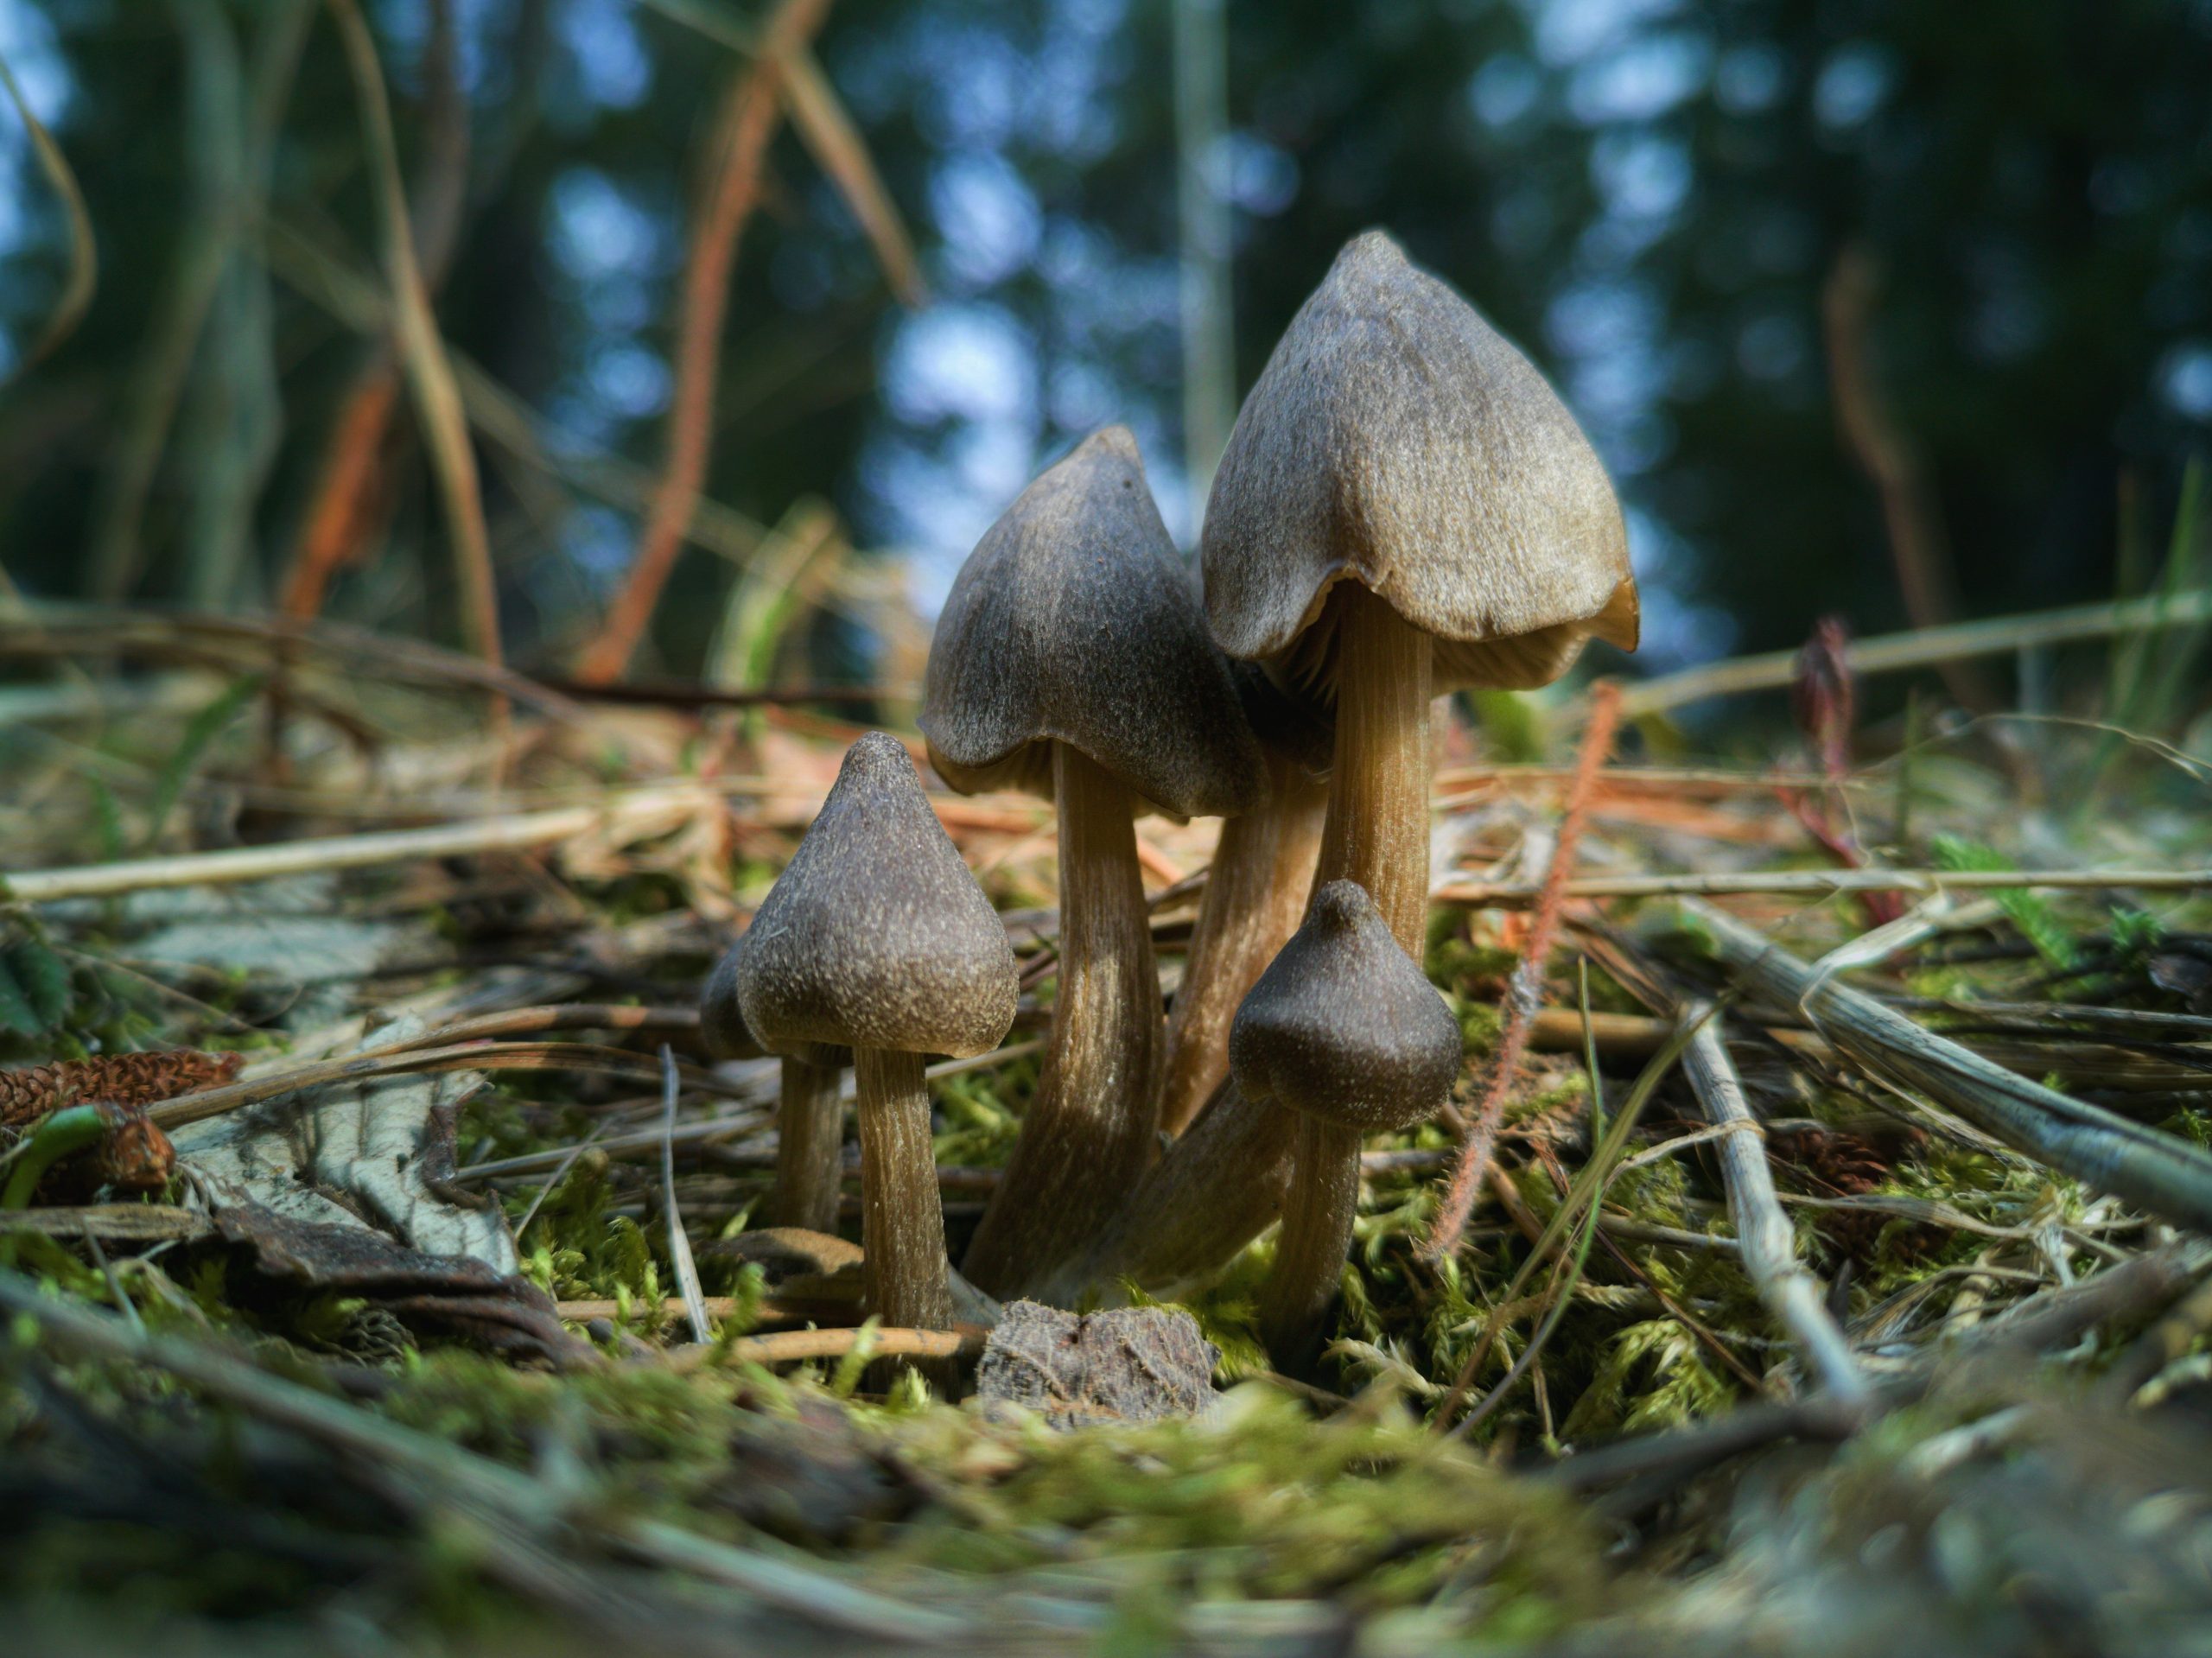 Mycelium on forest floor